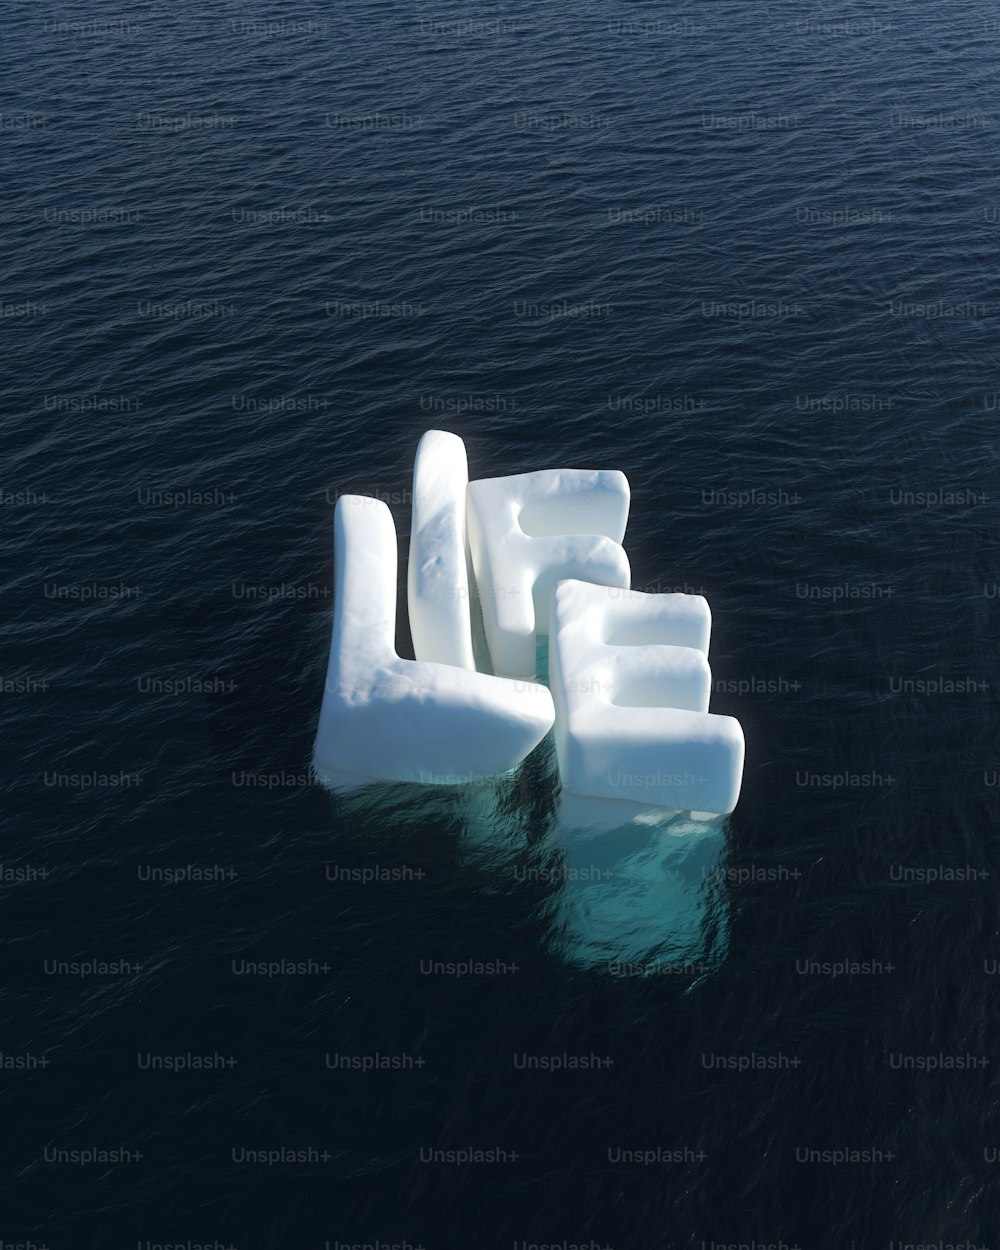 Un iceberg flottant au milieu de l’océan